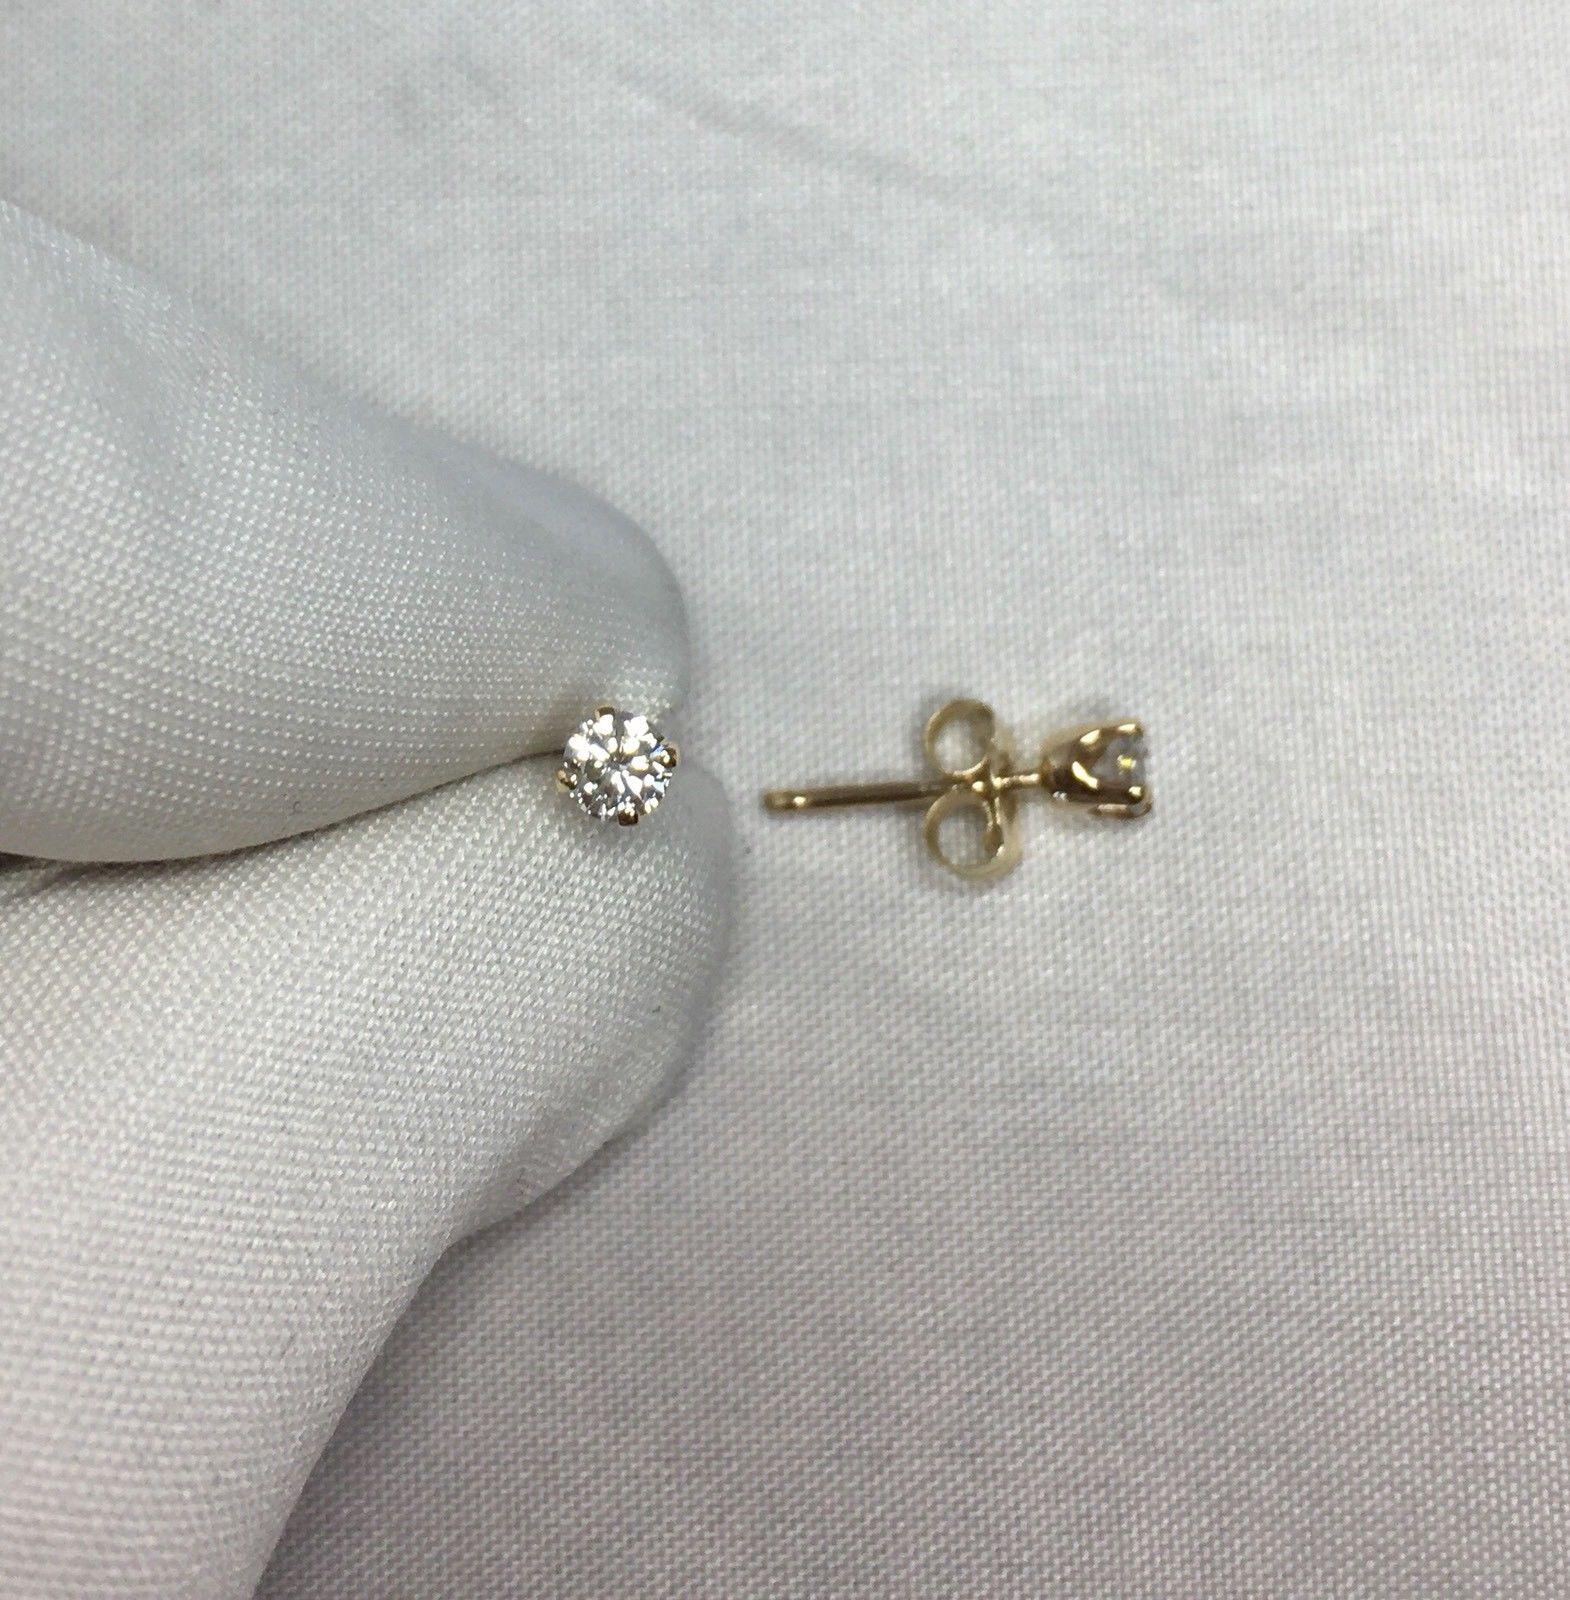 0.24 Carat White Diamond Stud Earrings Pair of 14 Karat Yellow Gold F/G VS1/VVS2 1